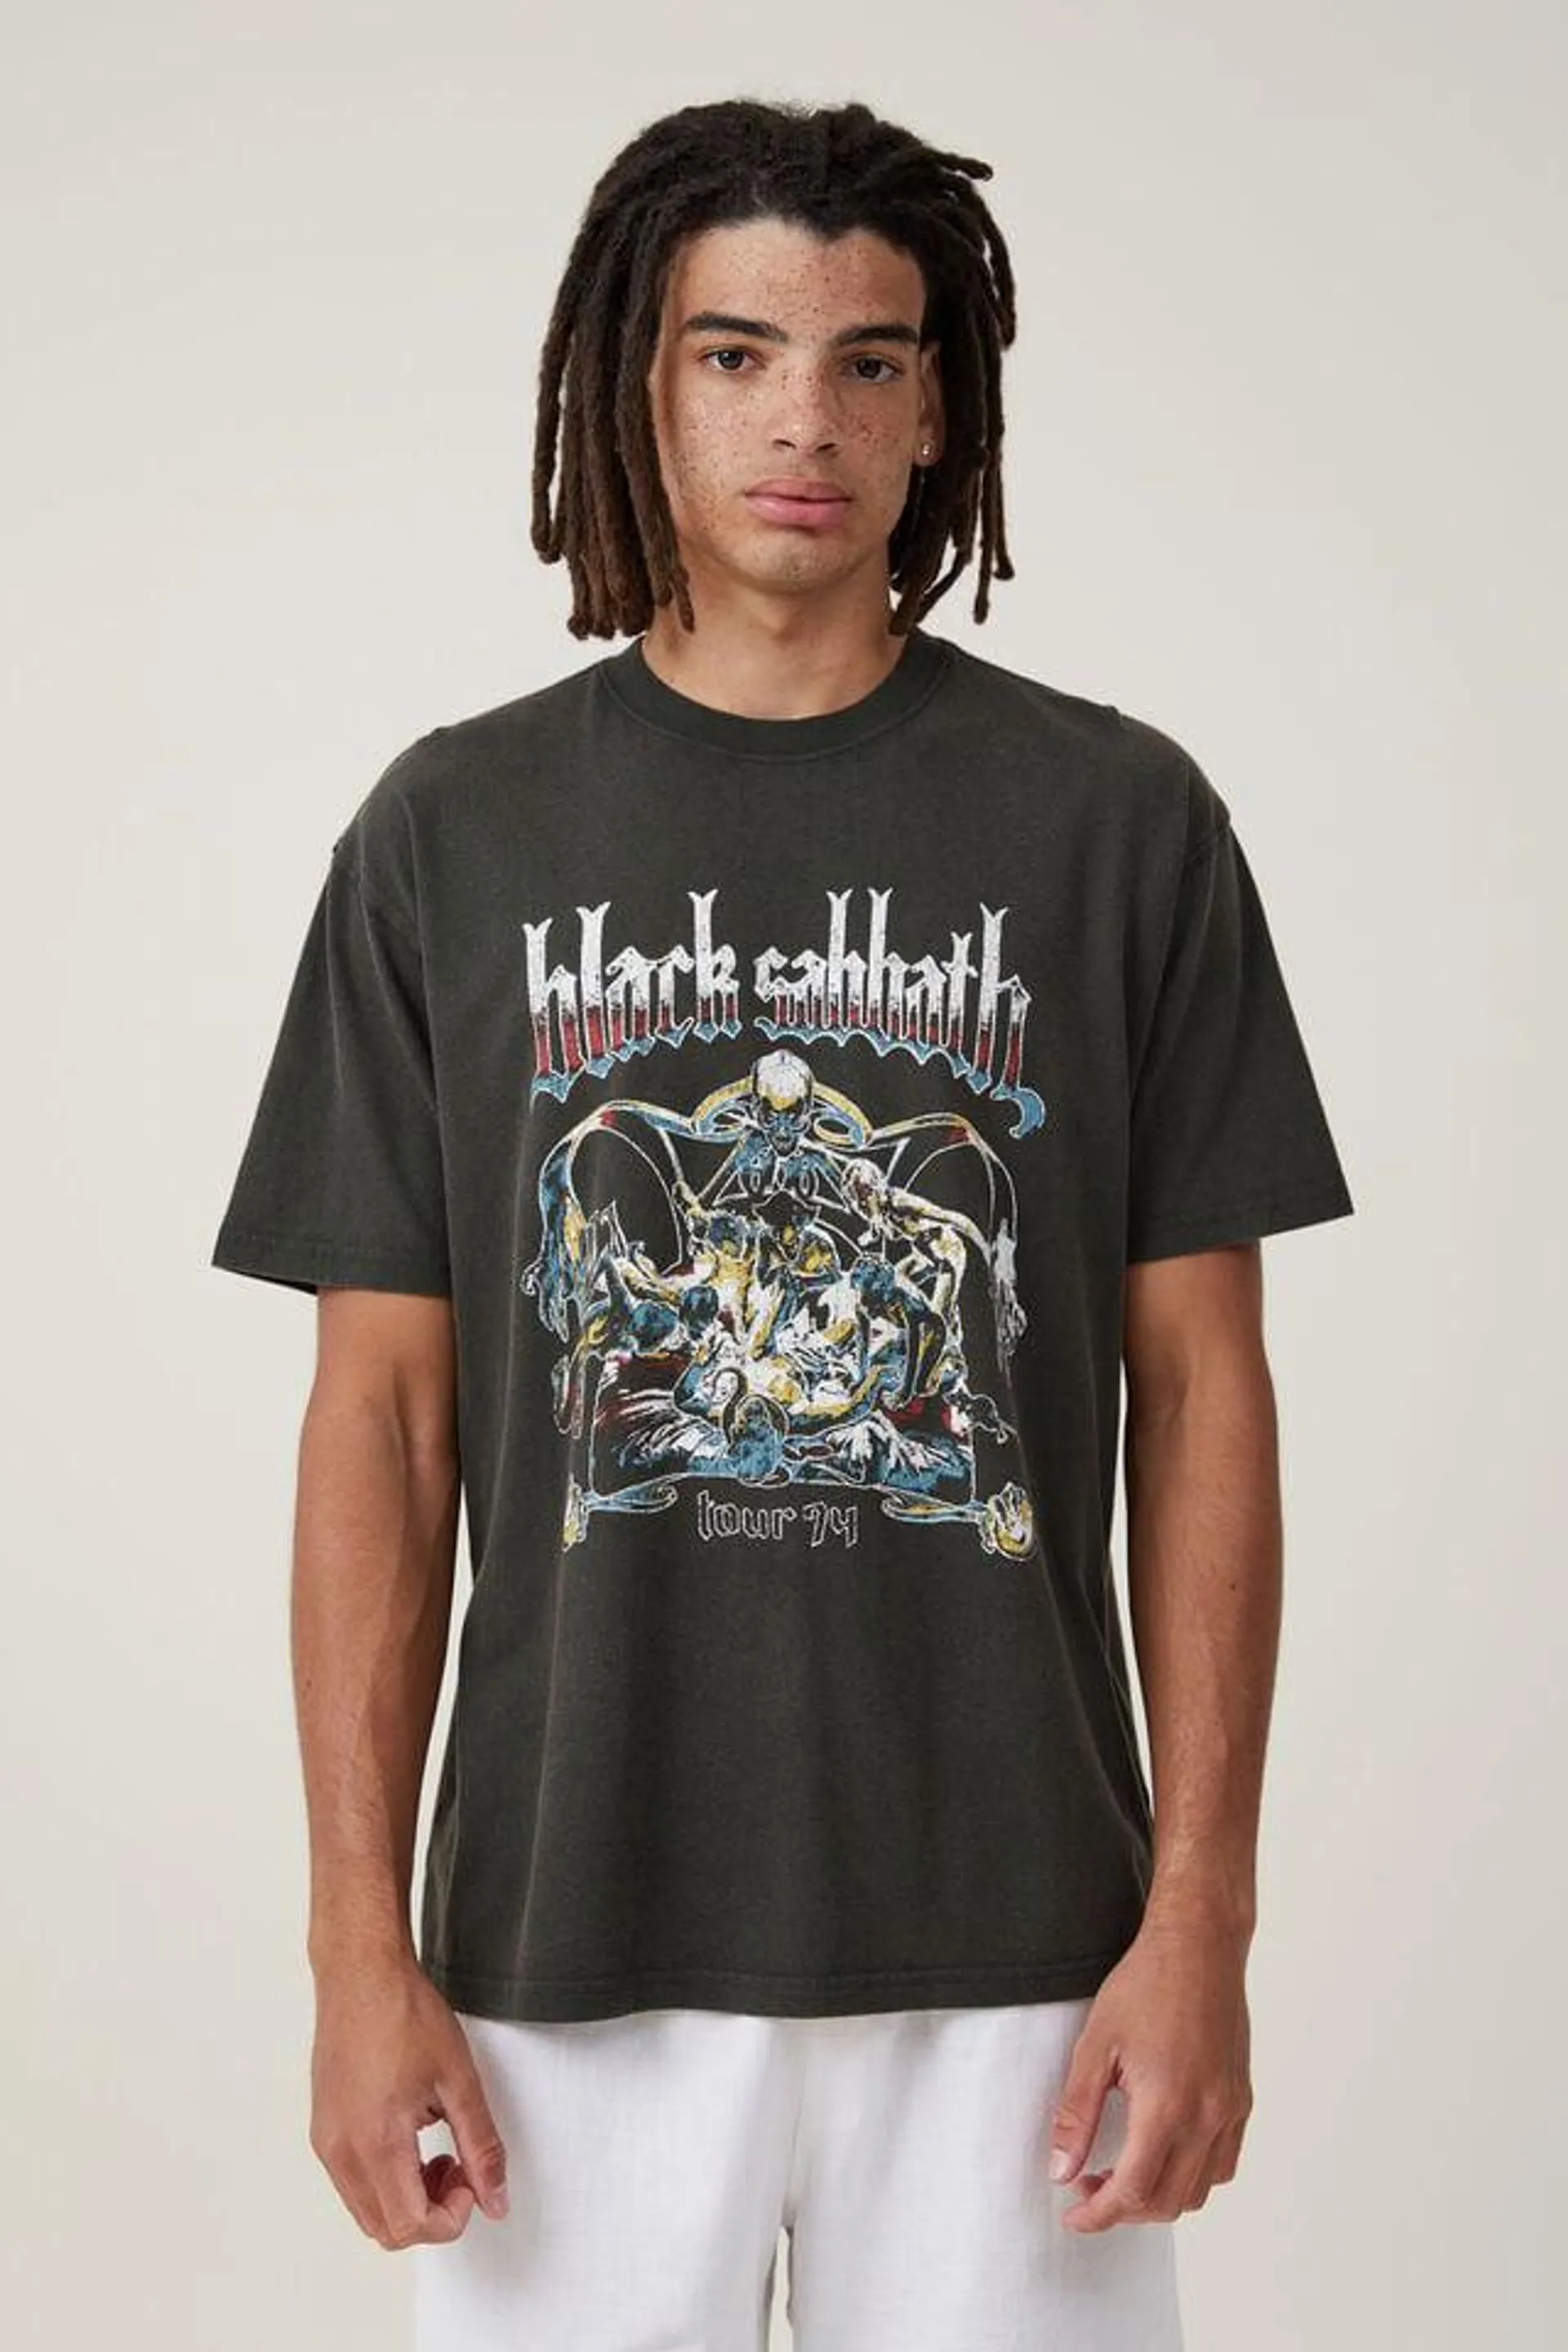 Black Sabbath Loose Fit T-Shirt